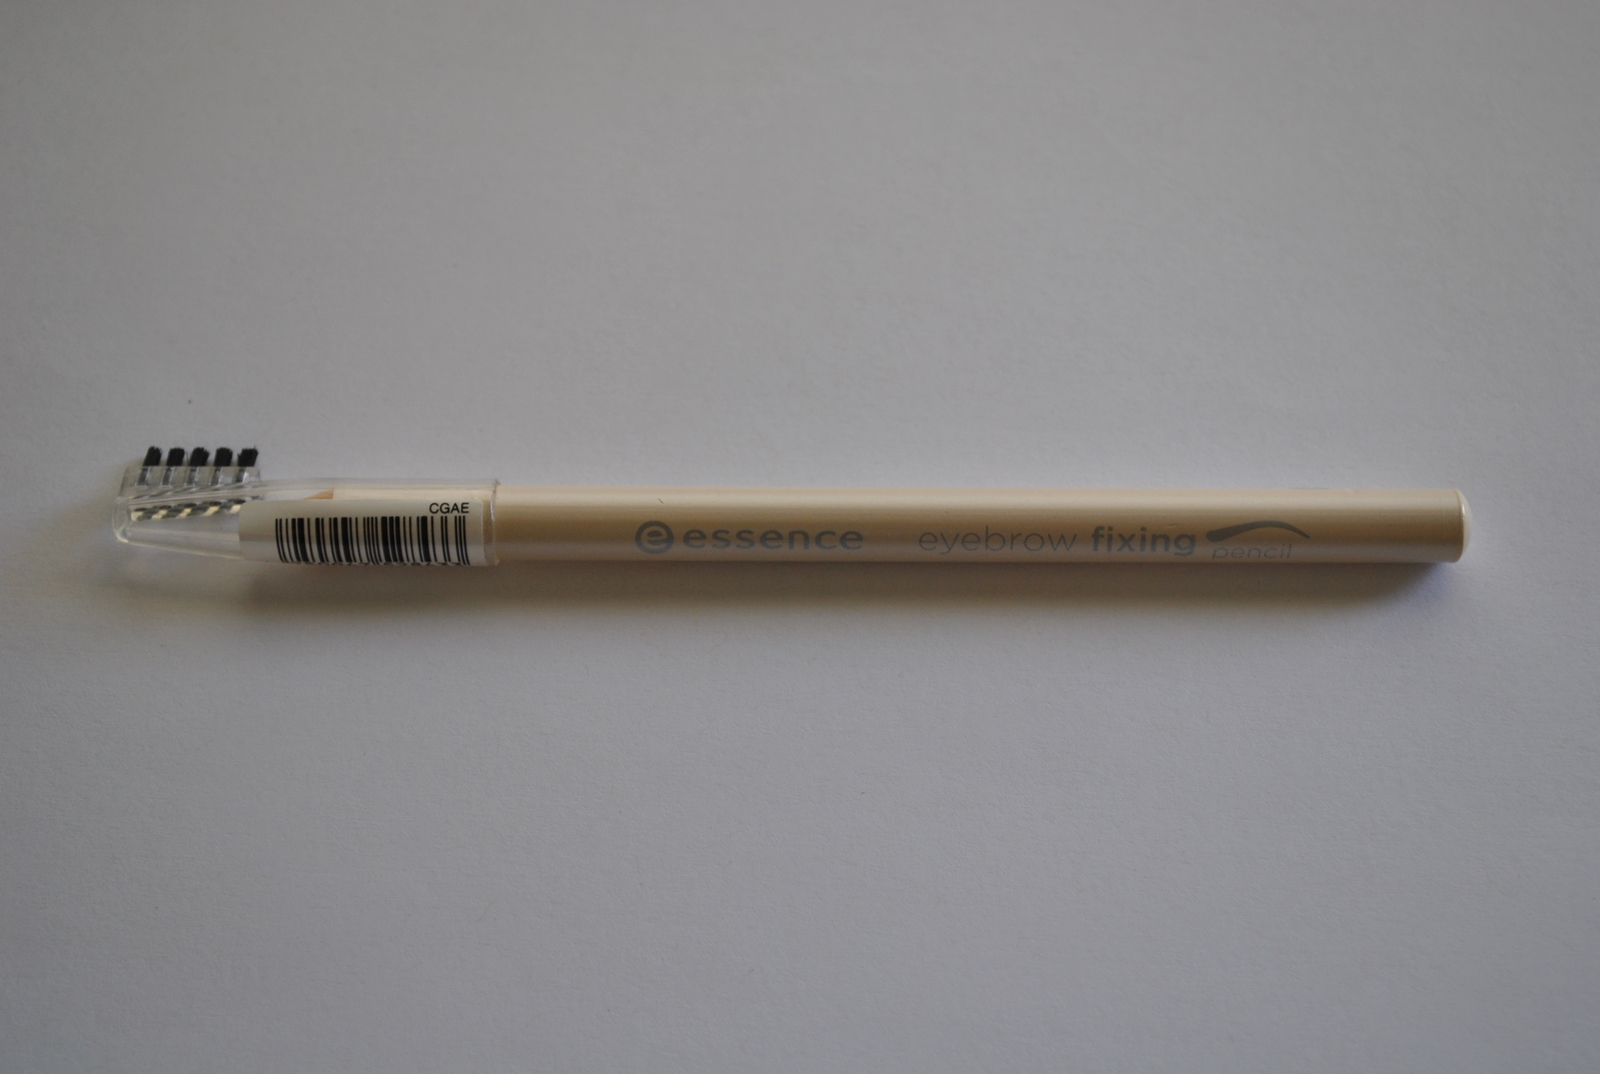 Essence Eyebrow Fixing Transparent Pencil with Brush 0.04 oz / 1.3 g - $12.99